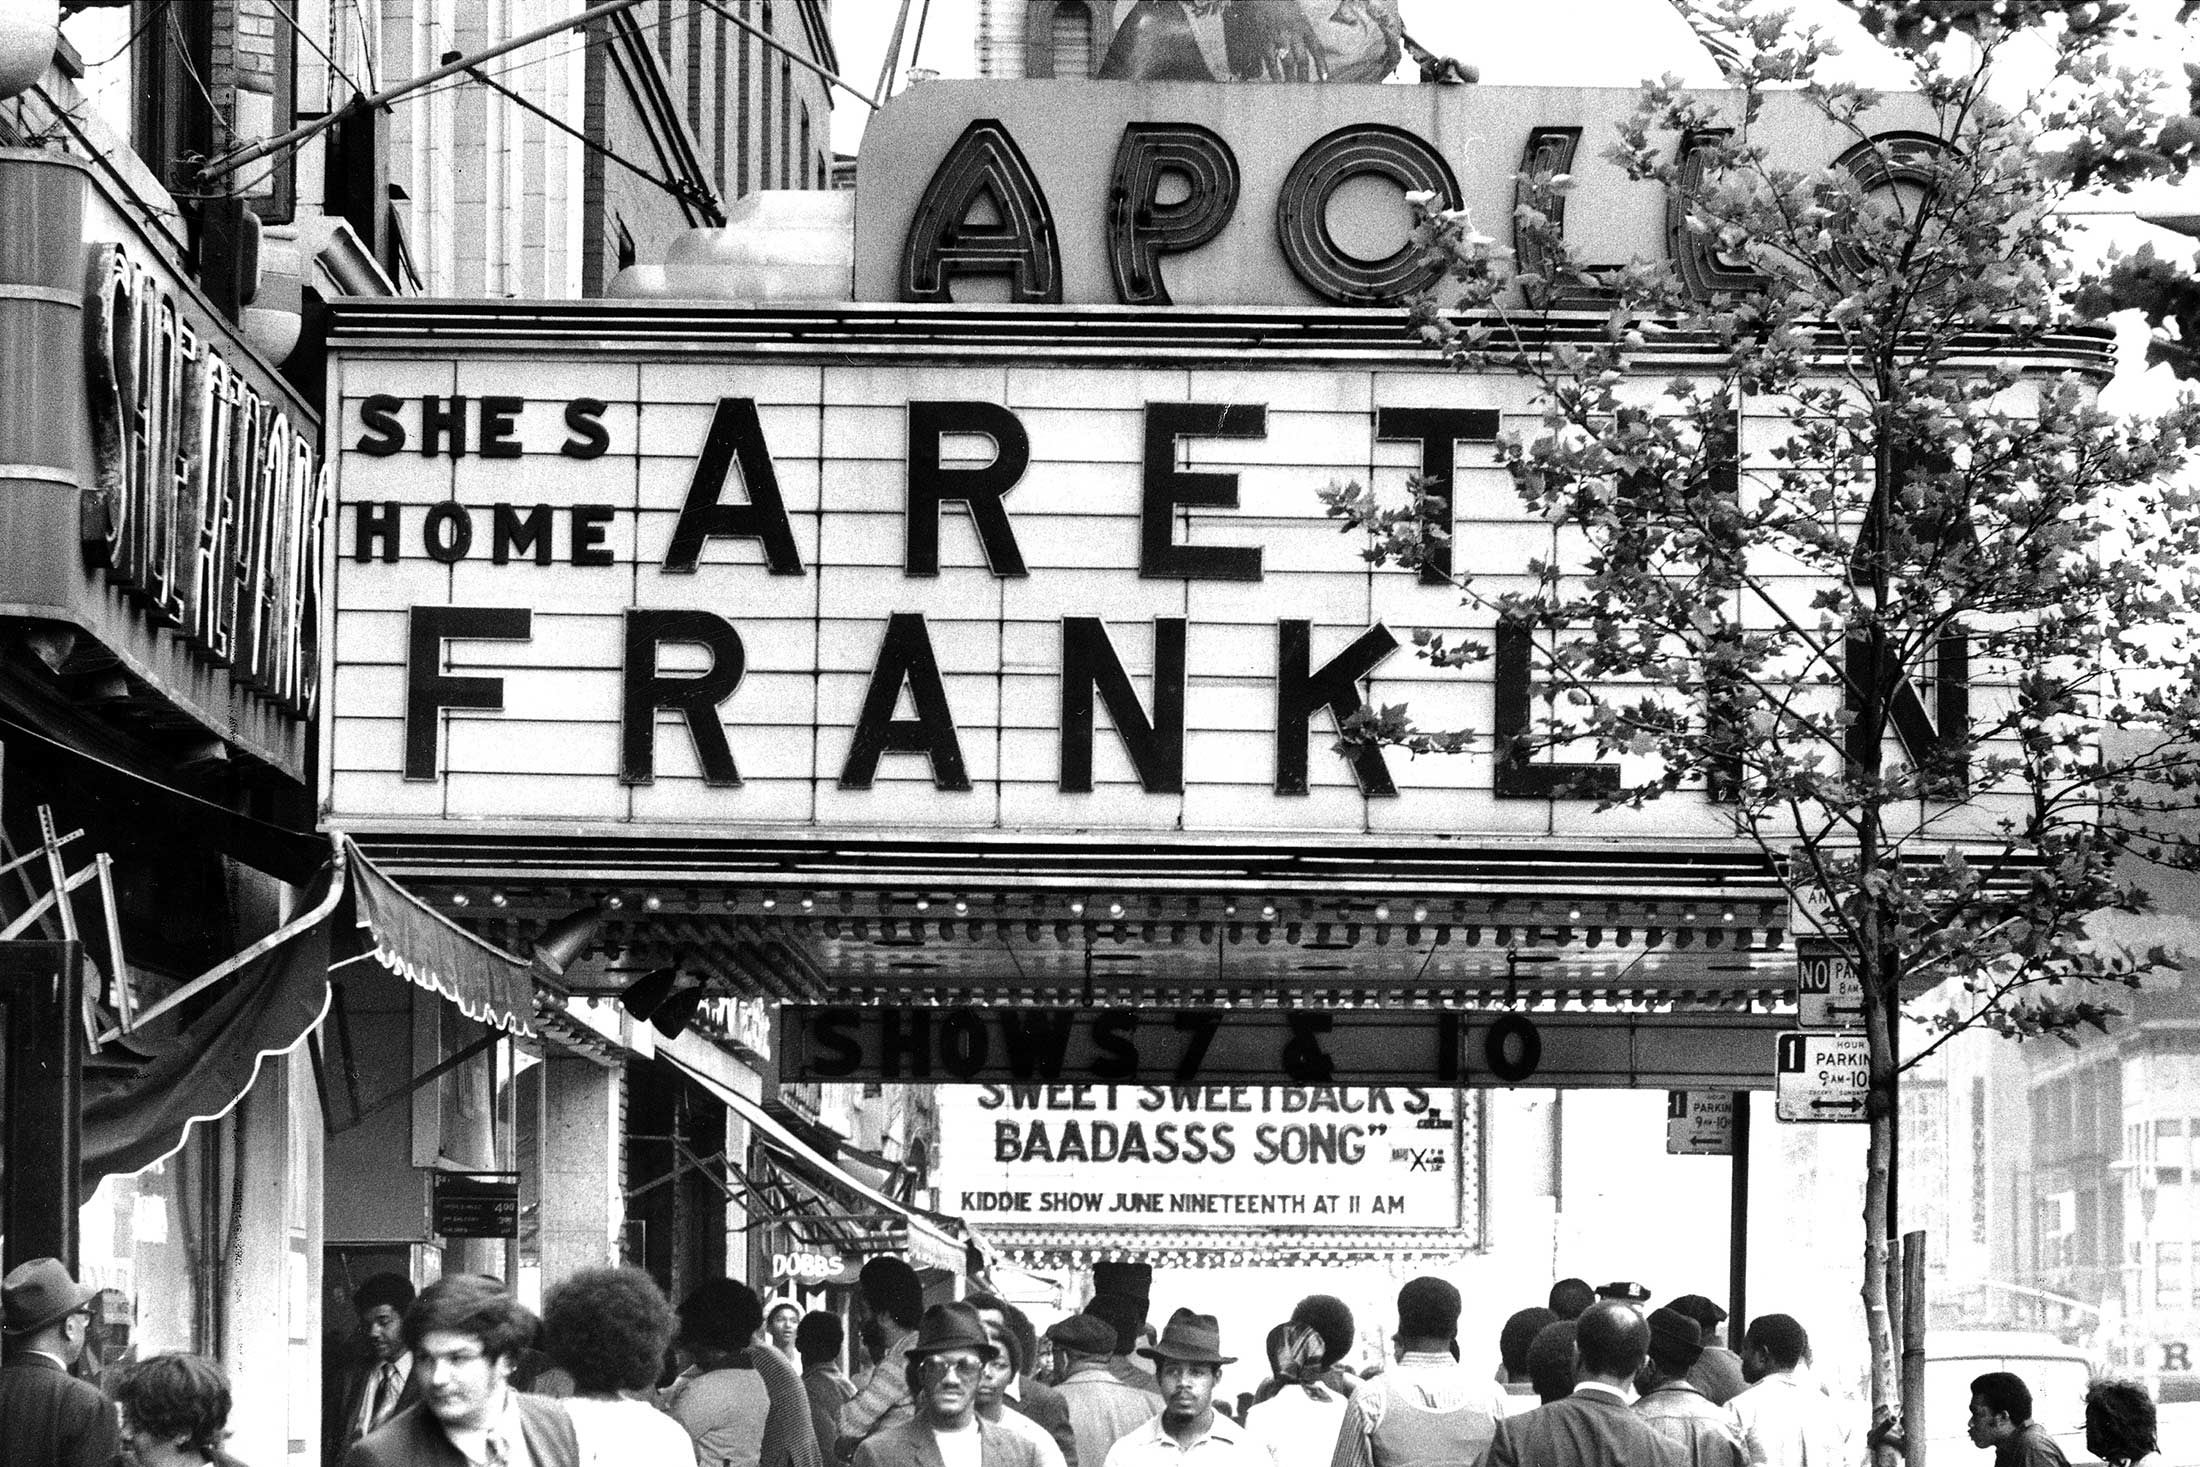 The Apollo Theater marquee in 1971, reading "She's Home: Aretha Franklin."